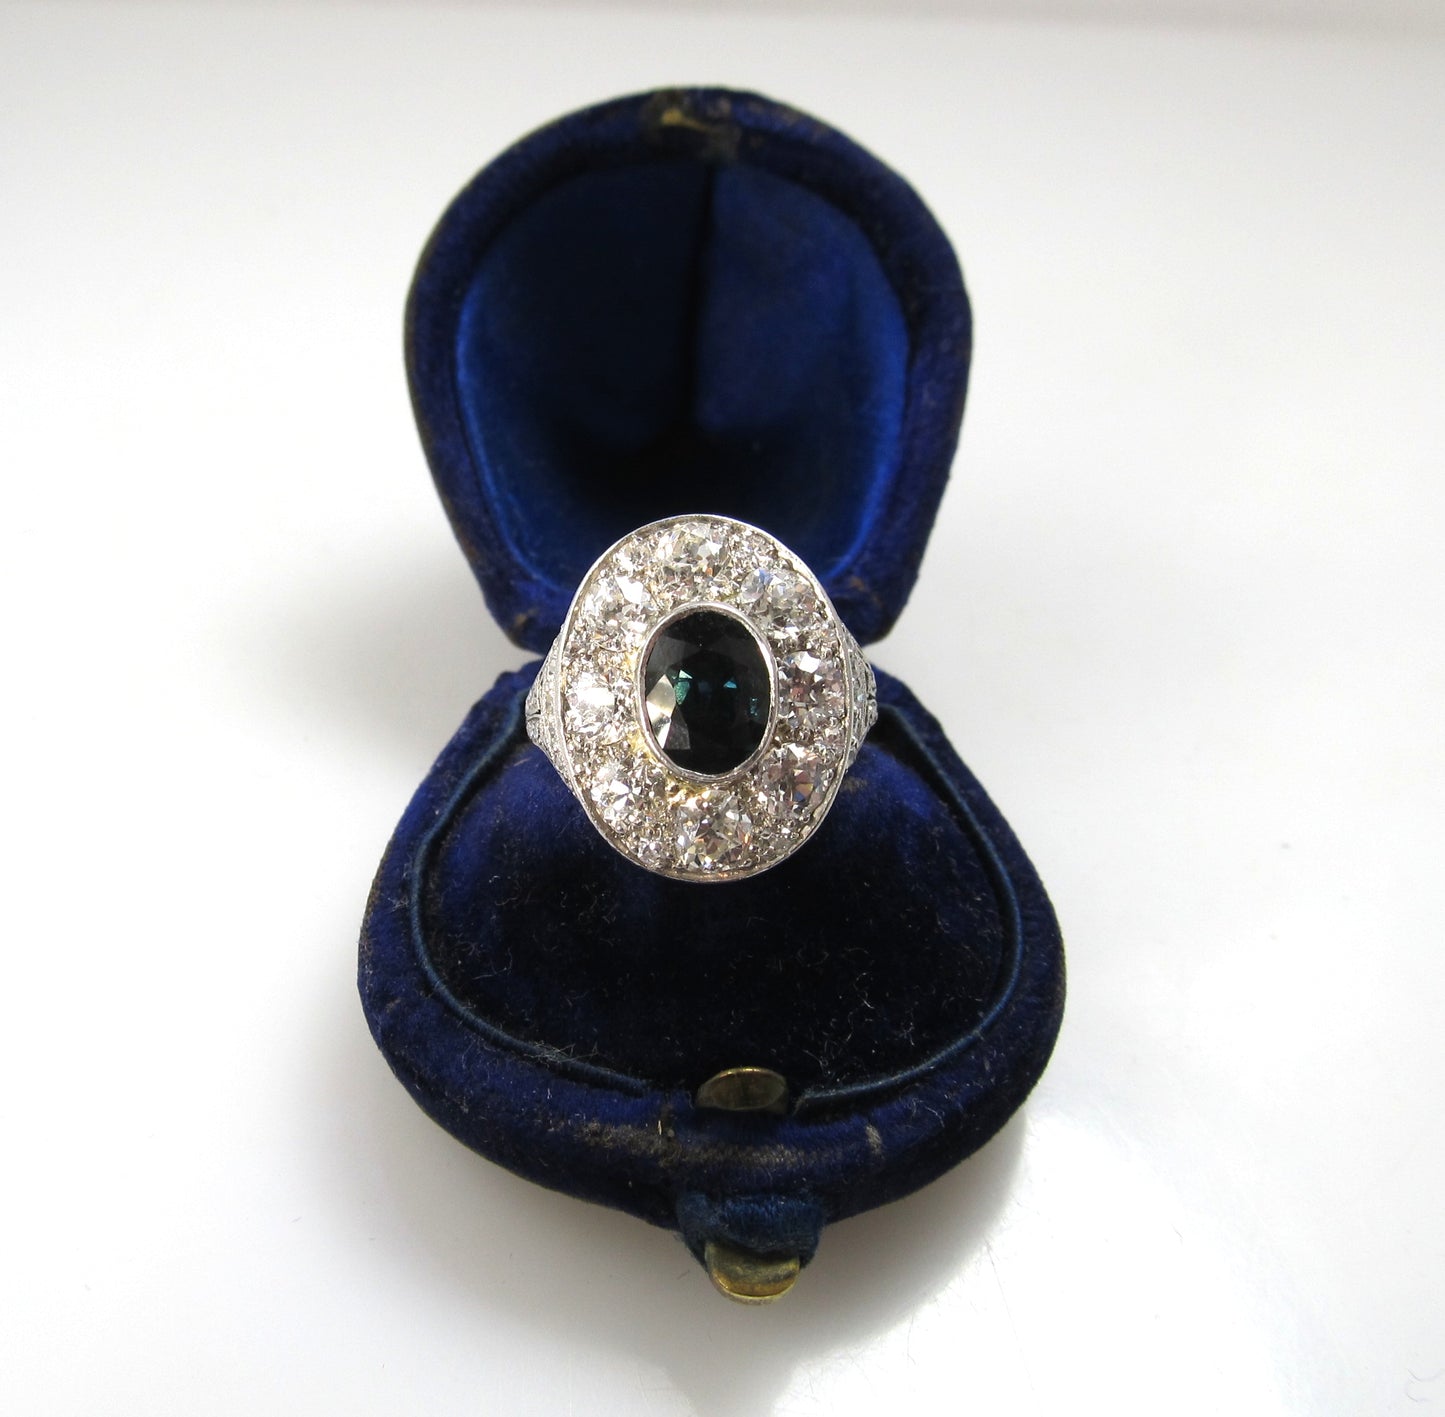 Antique platinum filigree statement ring with diamonds and a sapphire, circa 1920